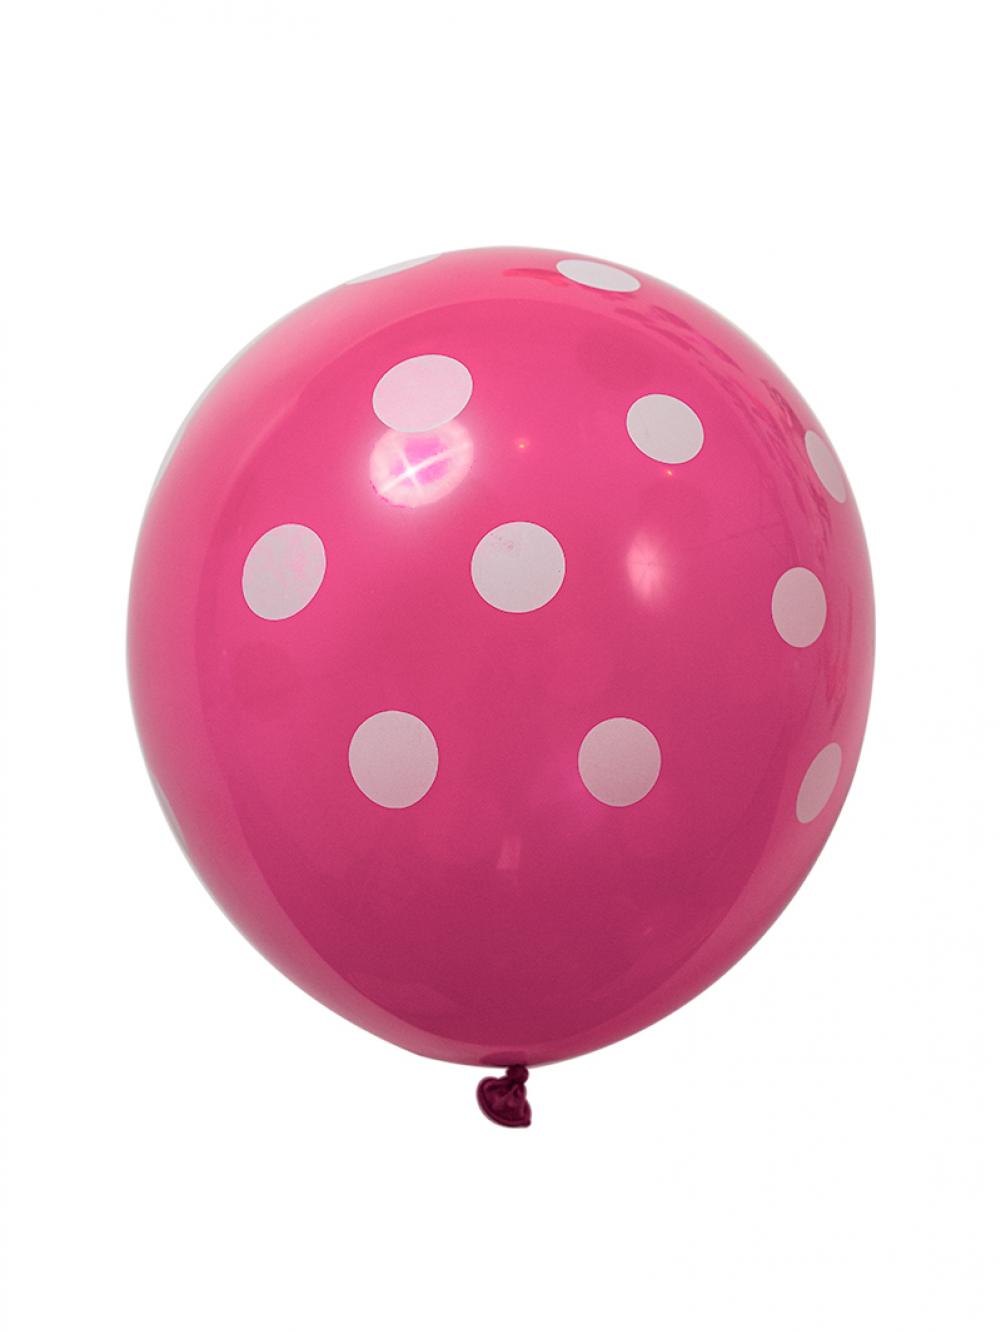 12 Inch Standard Polka Dot Balloons Hot Pink Balloon White Dot (100PCS)